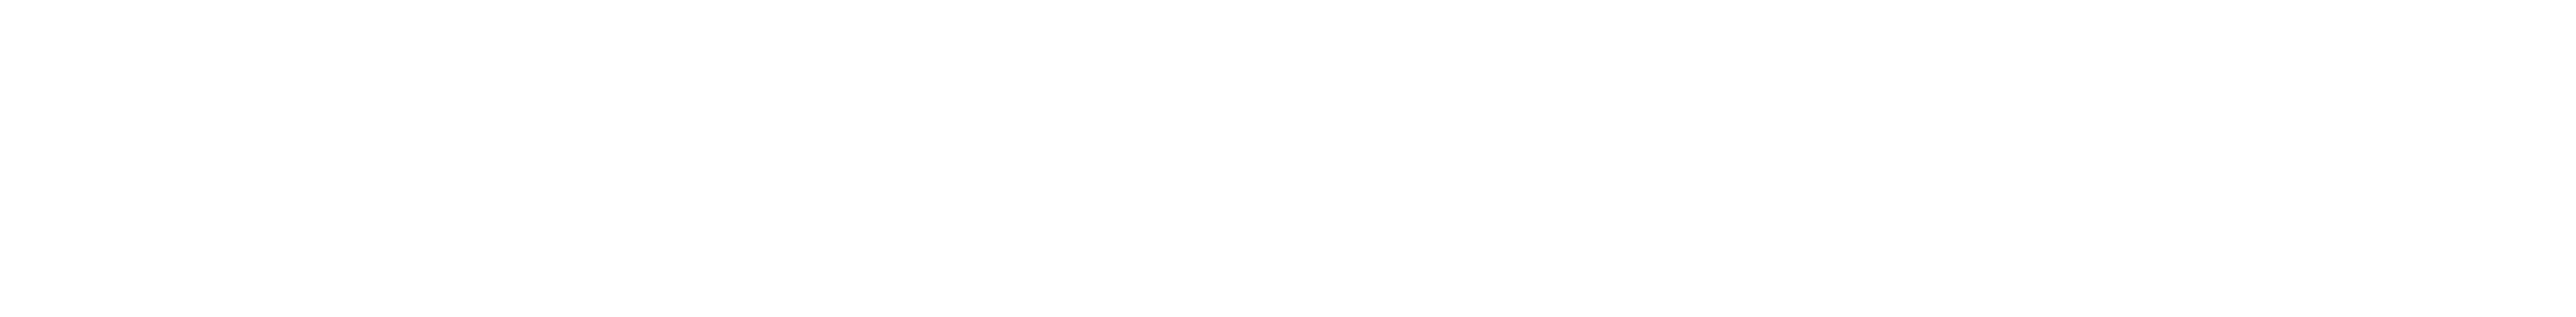 UTHealth Houston Alumni News Winter 2021 Inaugural Issue Logo Image